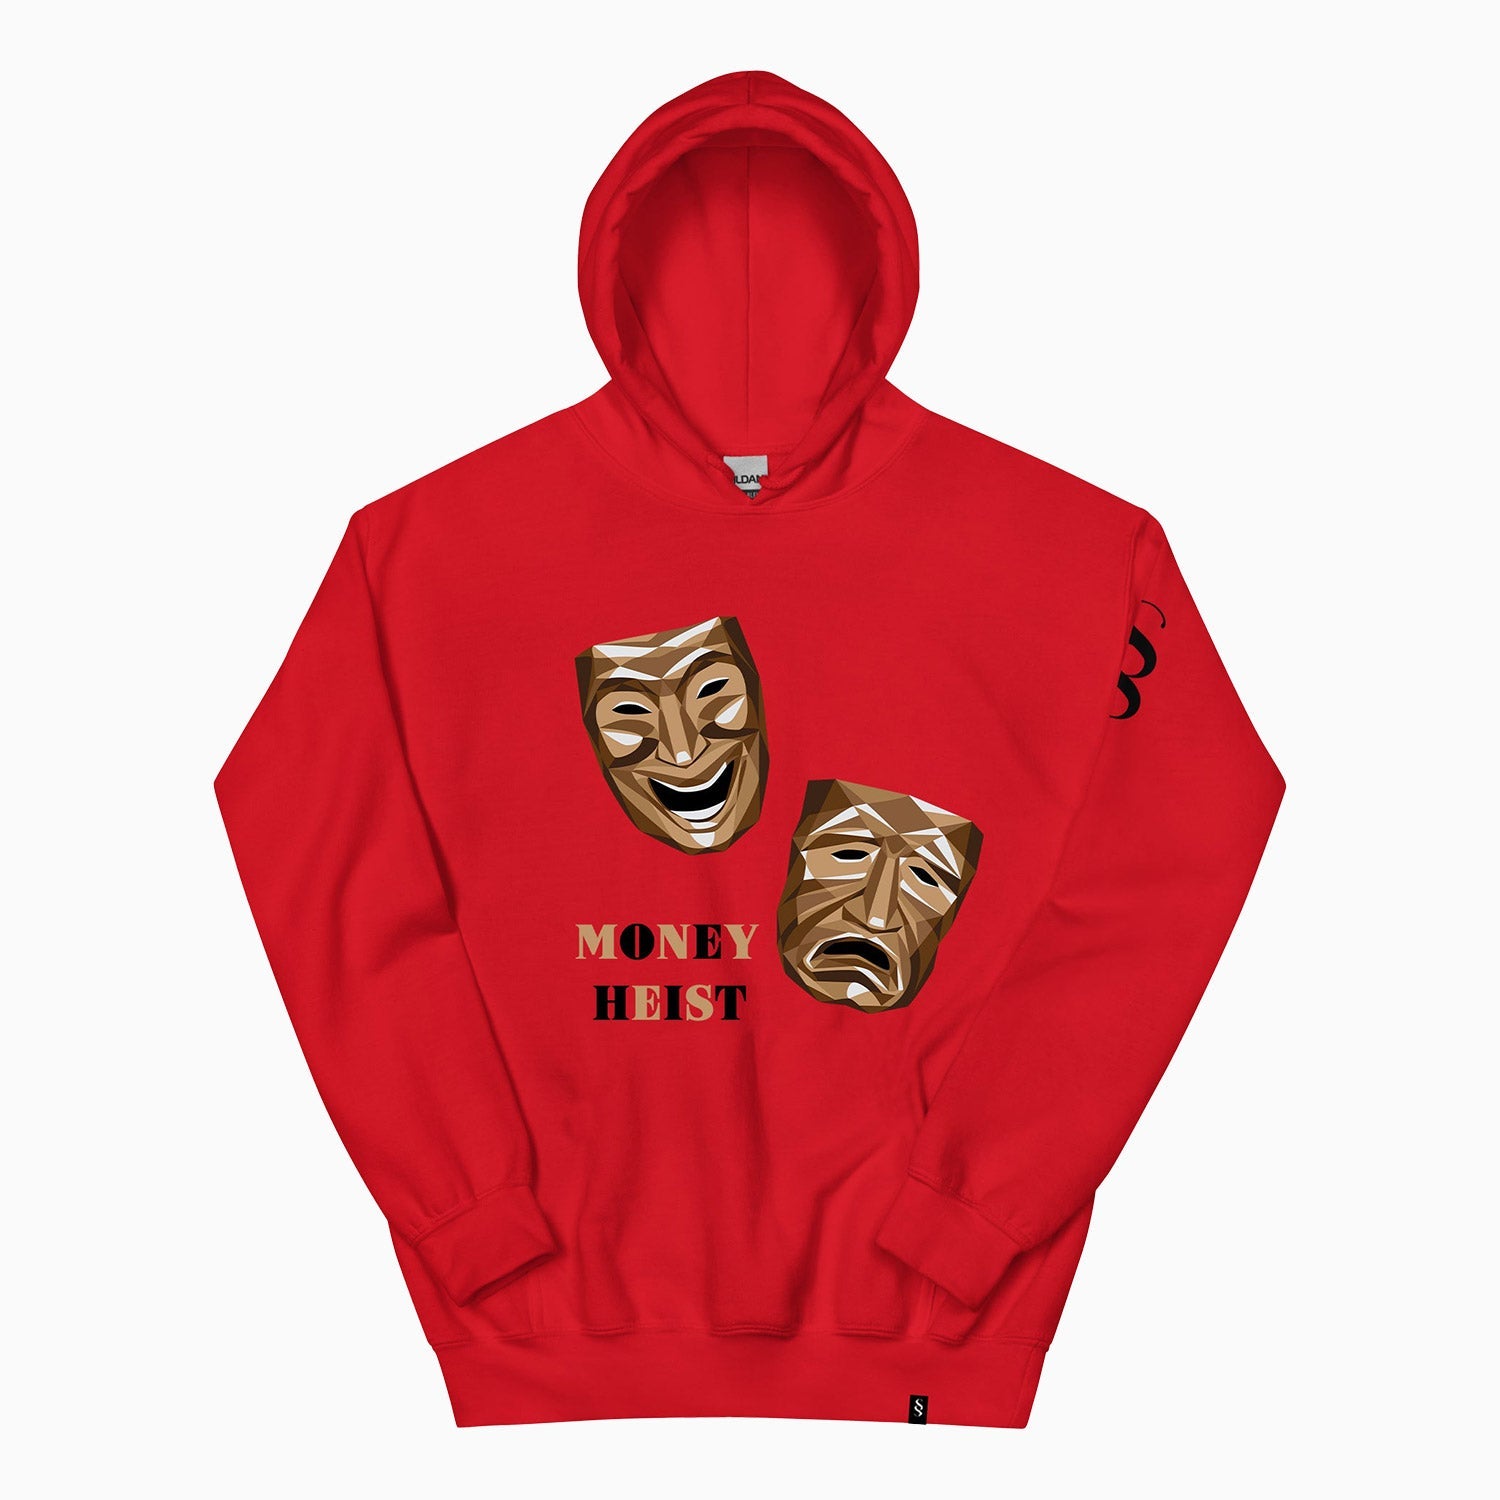 money-heist-design-printed-pull-over-red-hoodie-for-men-sh108-657